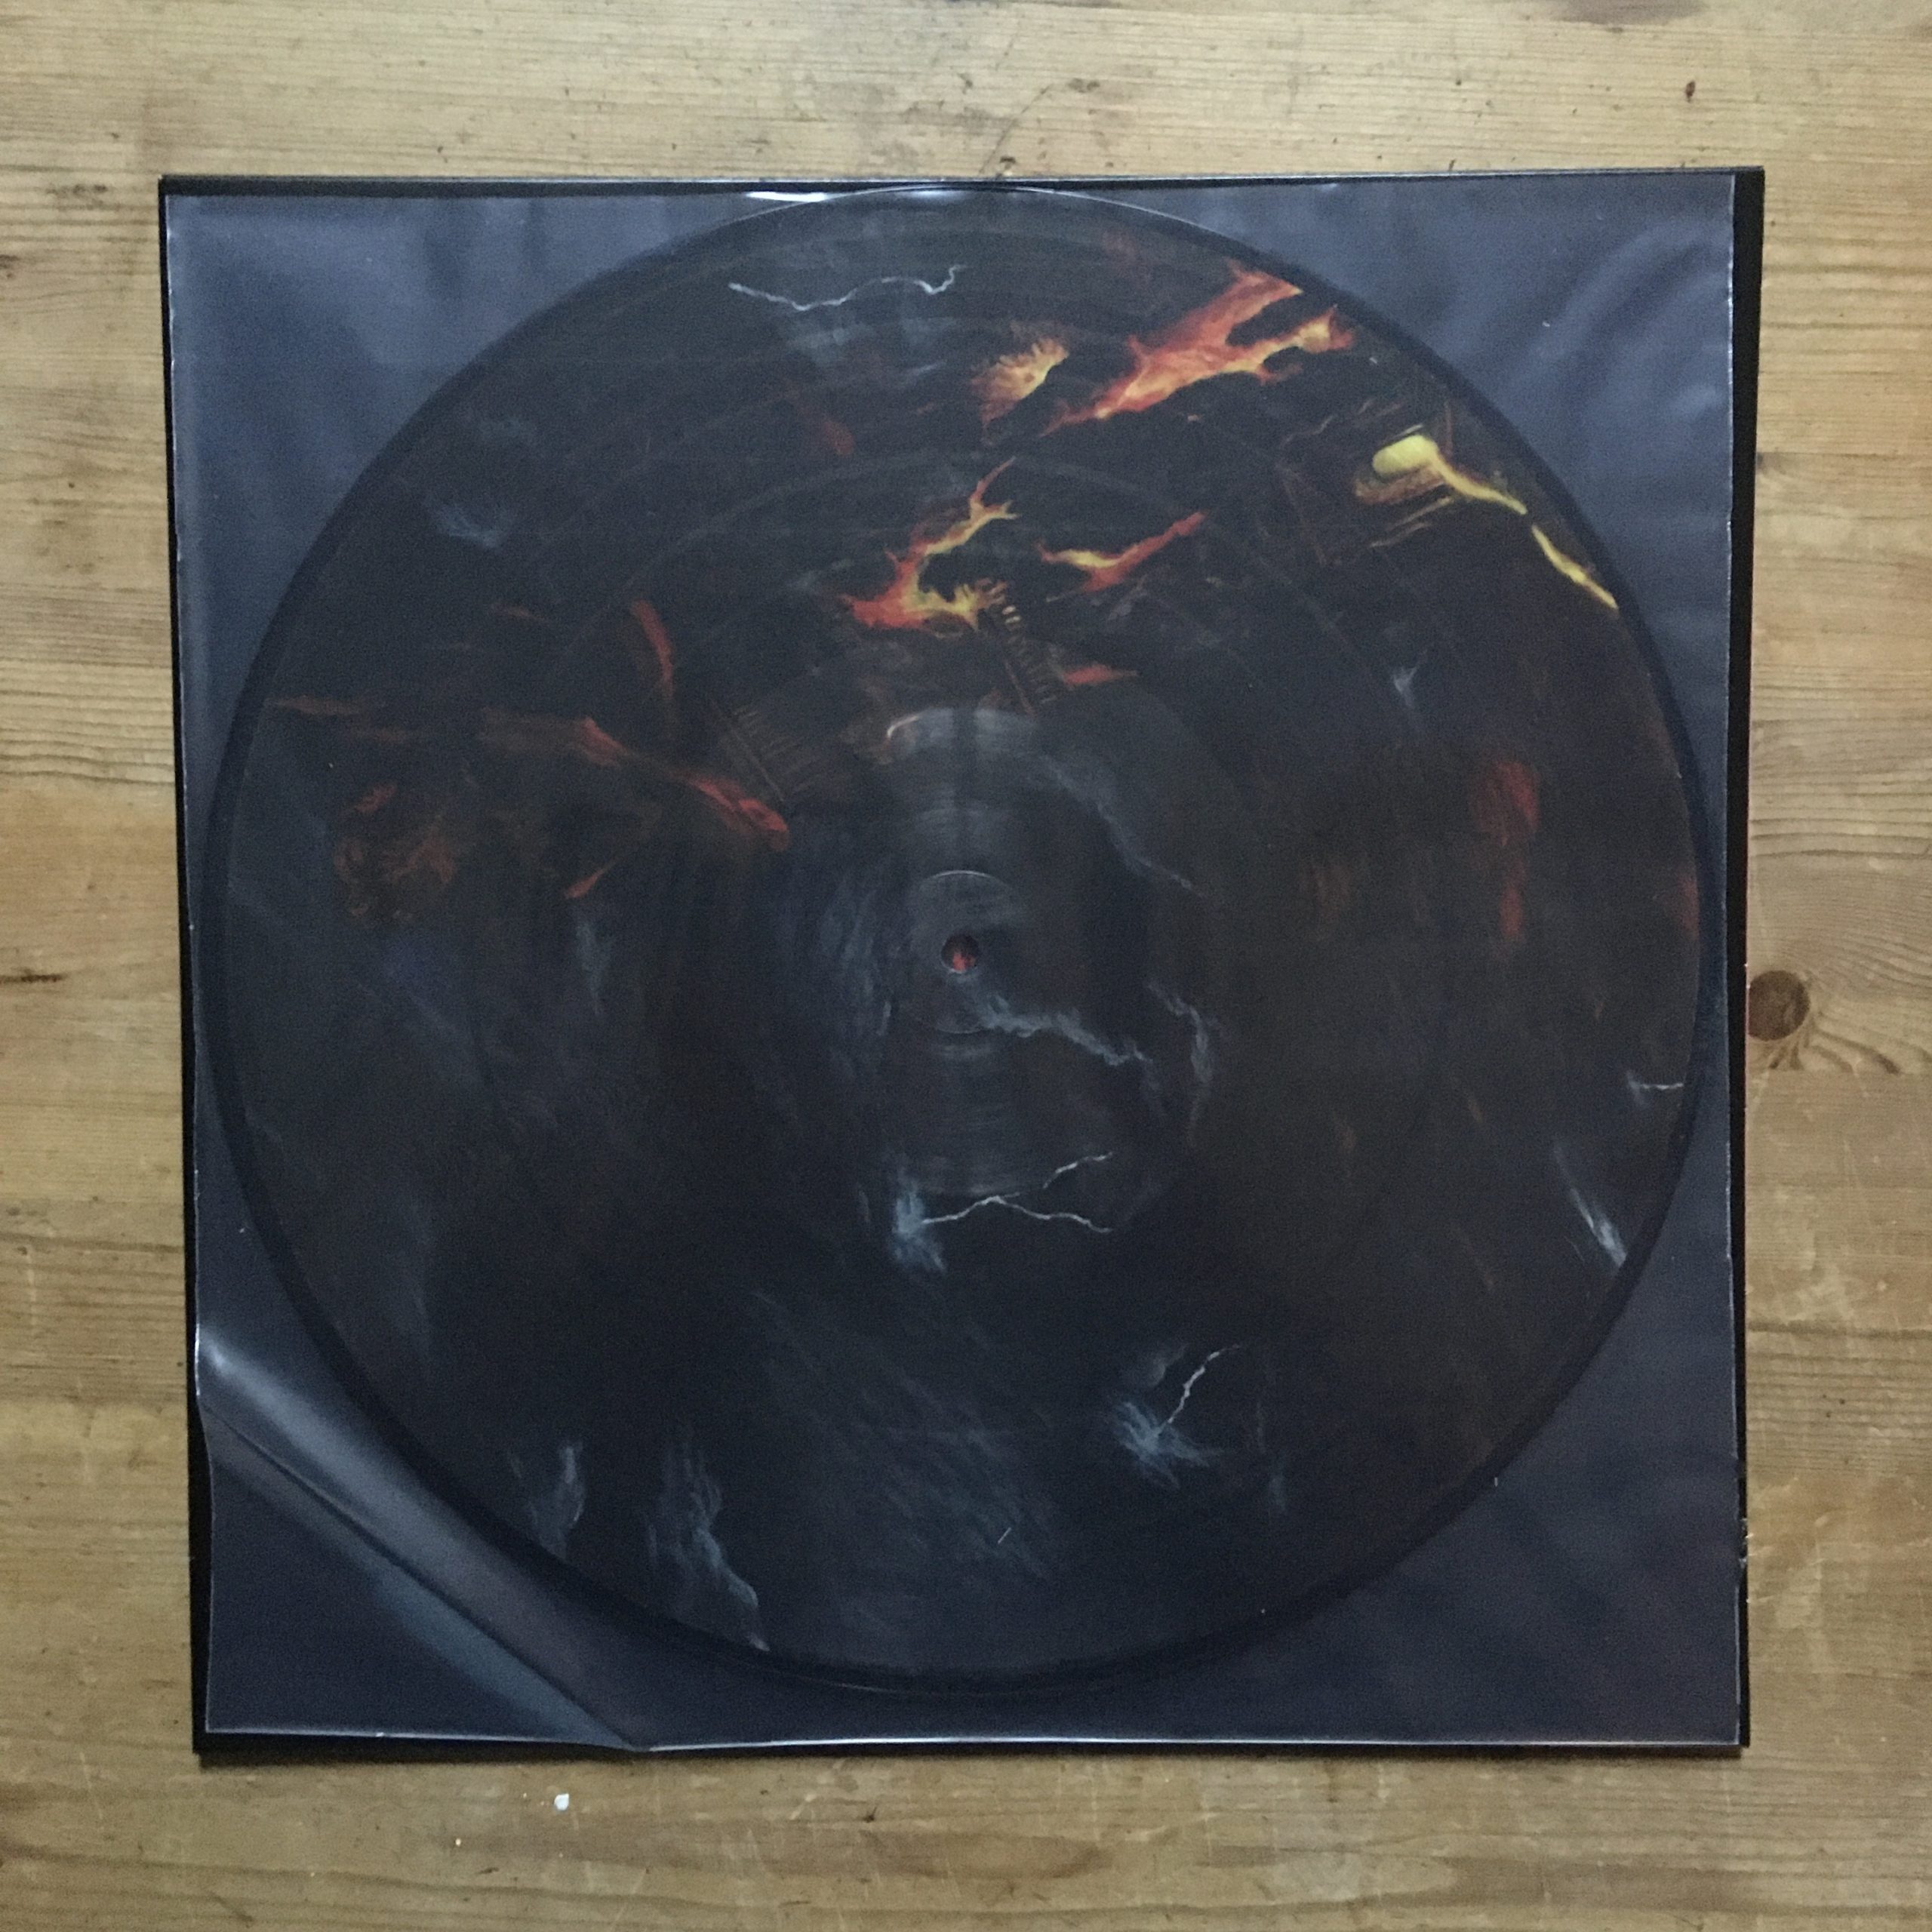 Photo of the Lvcifyre - "Sun Eater" LP (picture disc)